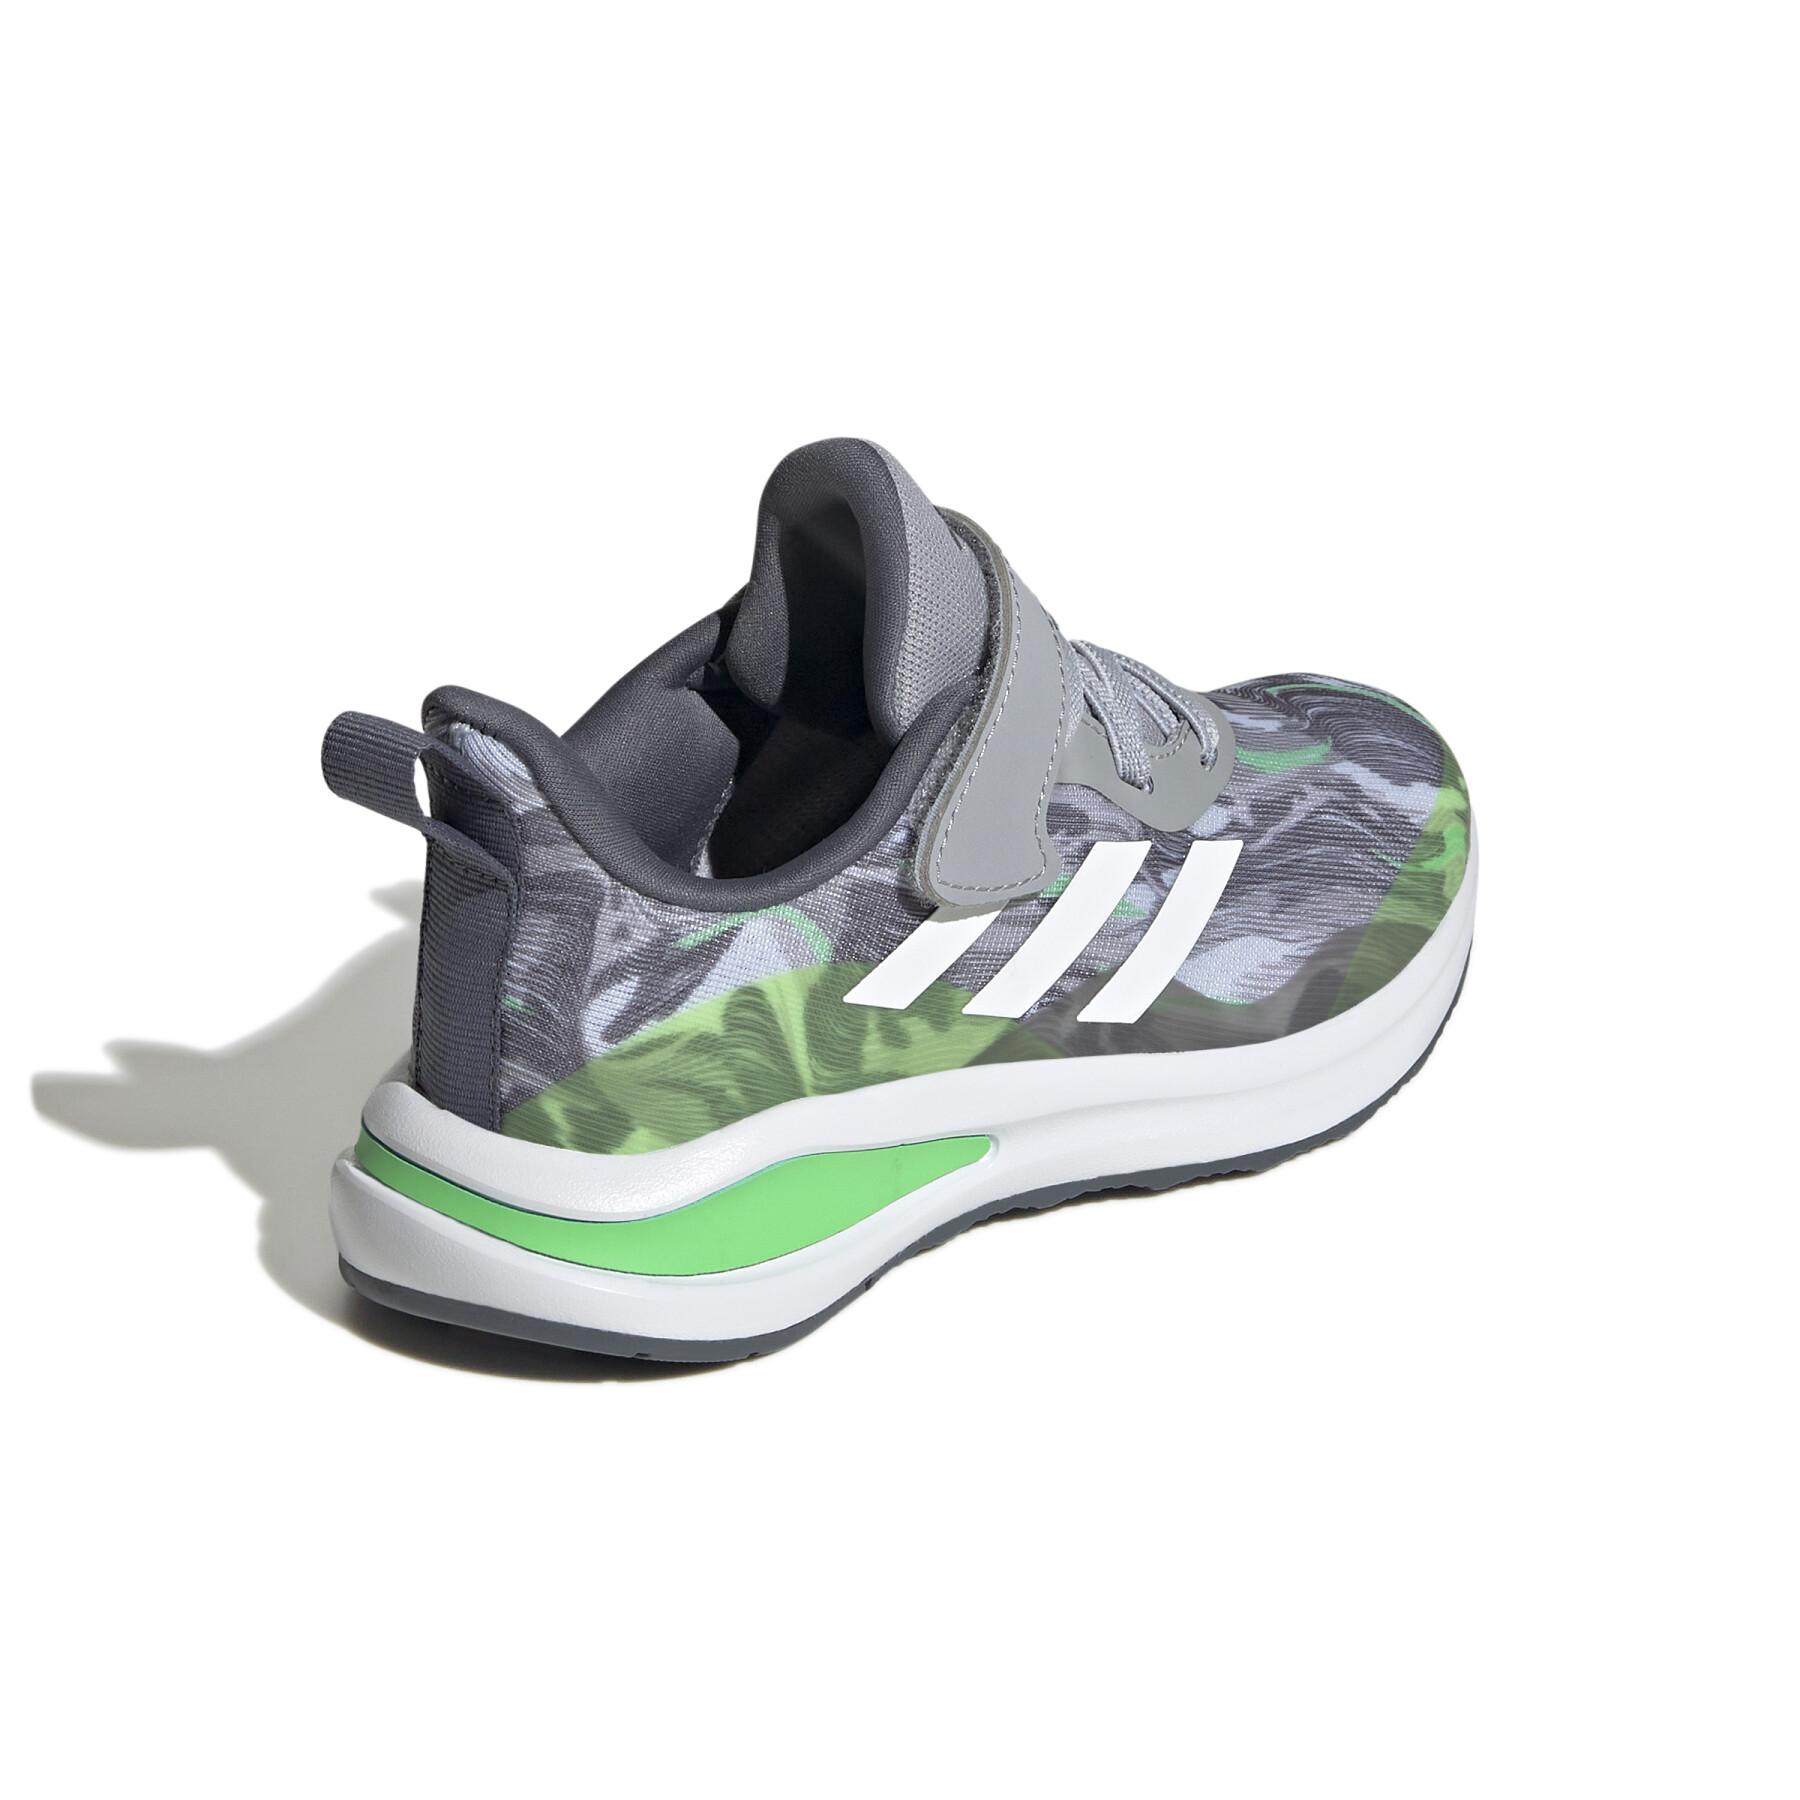 Chaussures de running enfant adidas FortaRun ElastiC